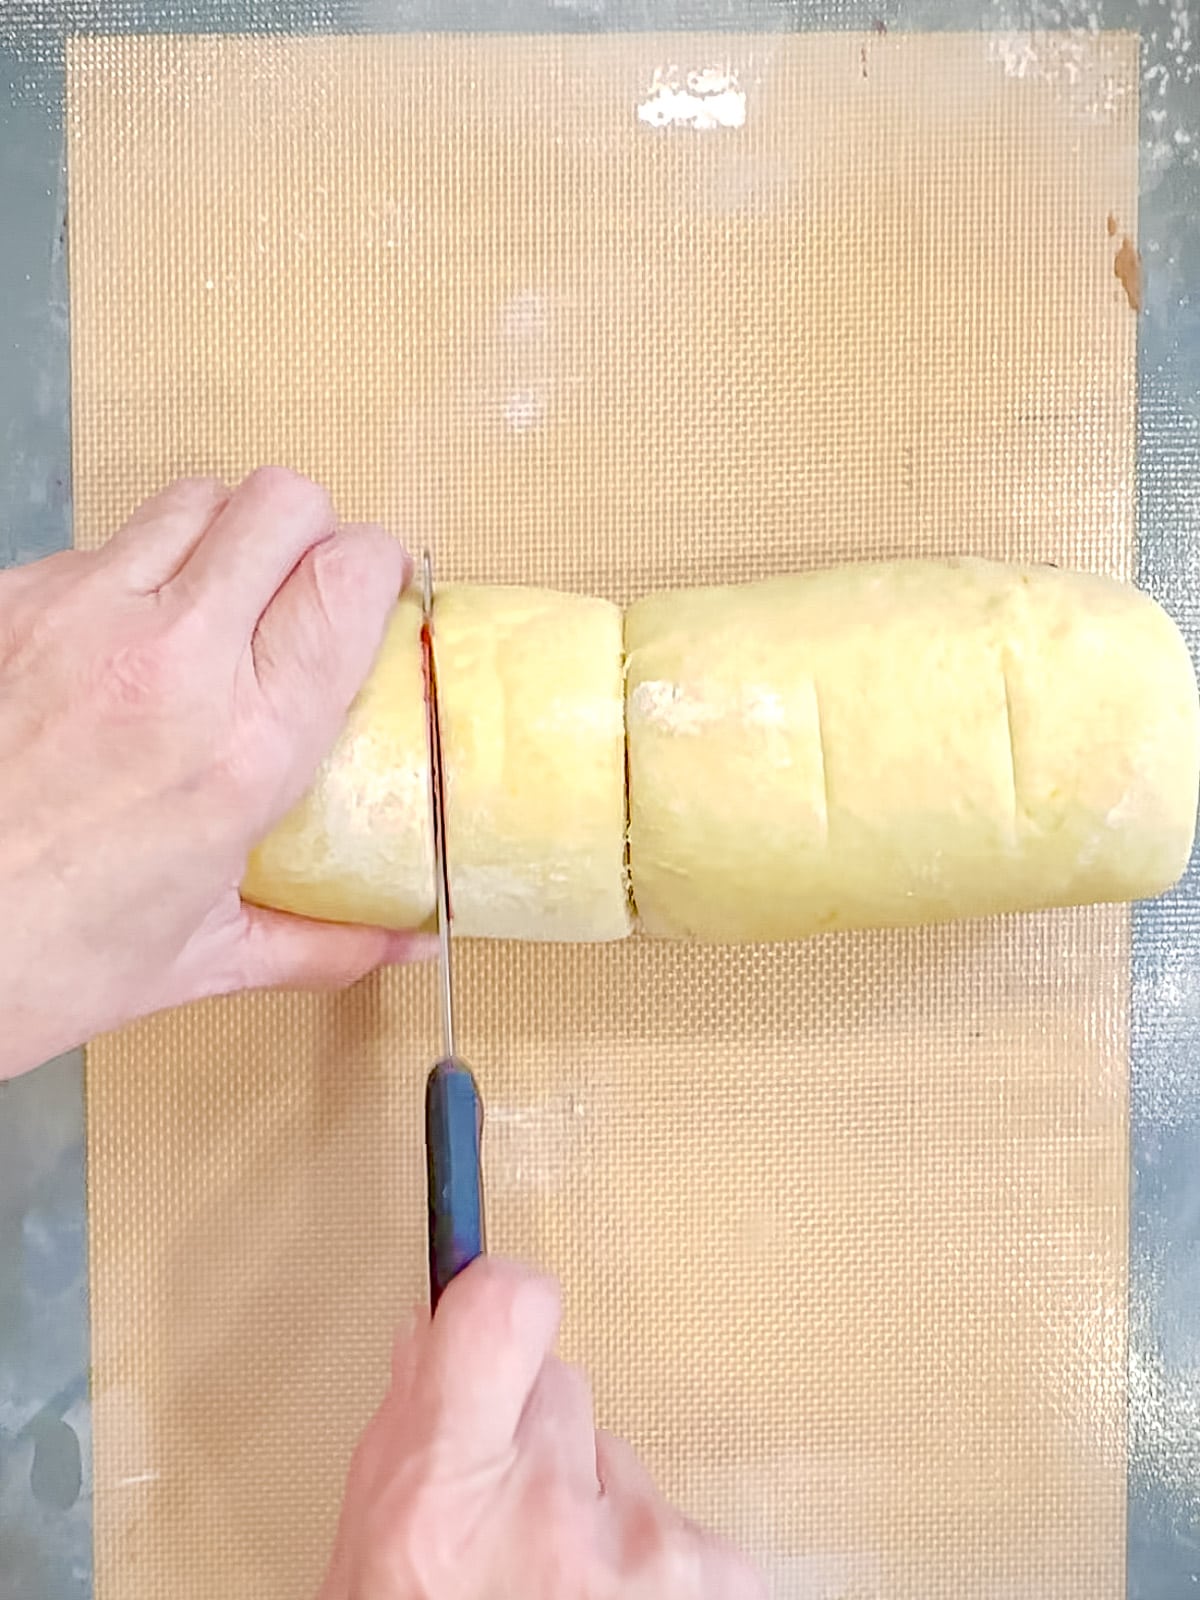 Using a serrated knife to cut blueberry, orange, cinnamon rolls.